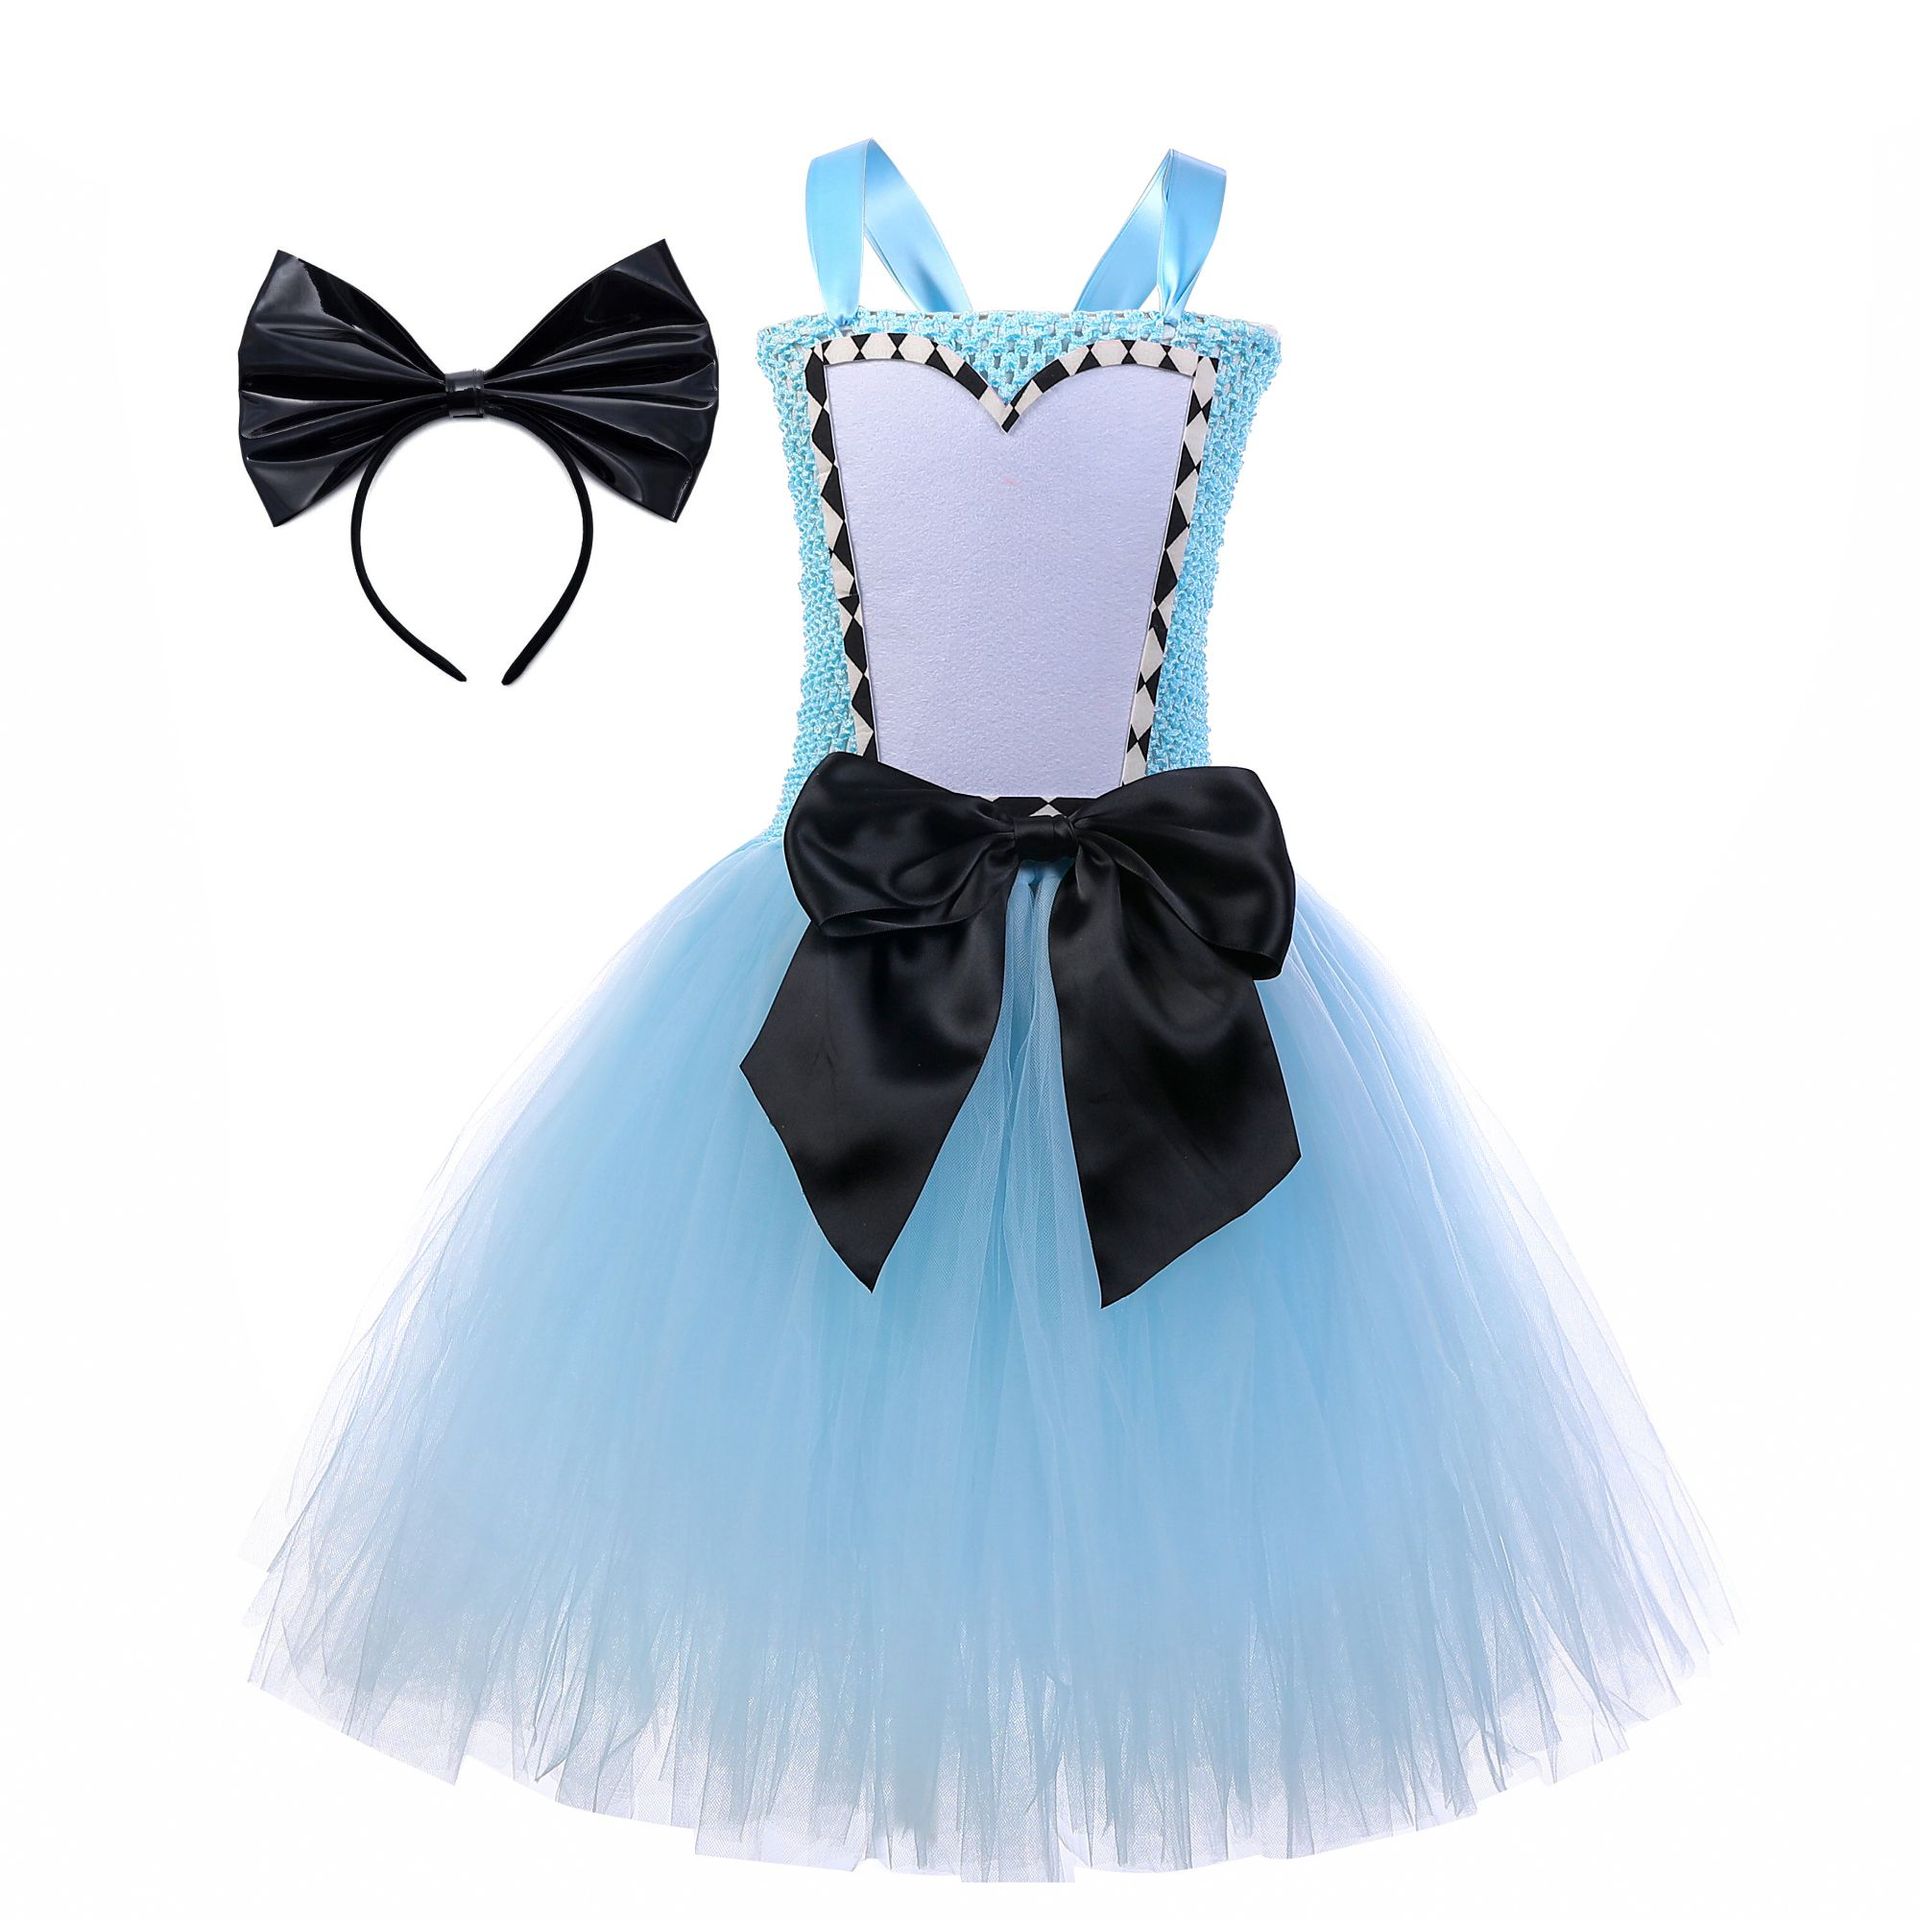 Alice in Wonderland Alice Princess Costume Kids Girls Cosplay Party Tutu Dress Halloween